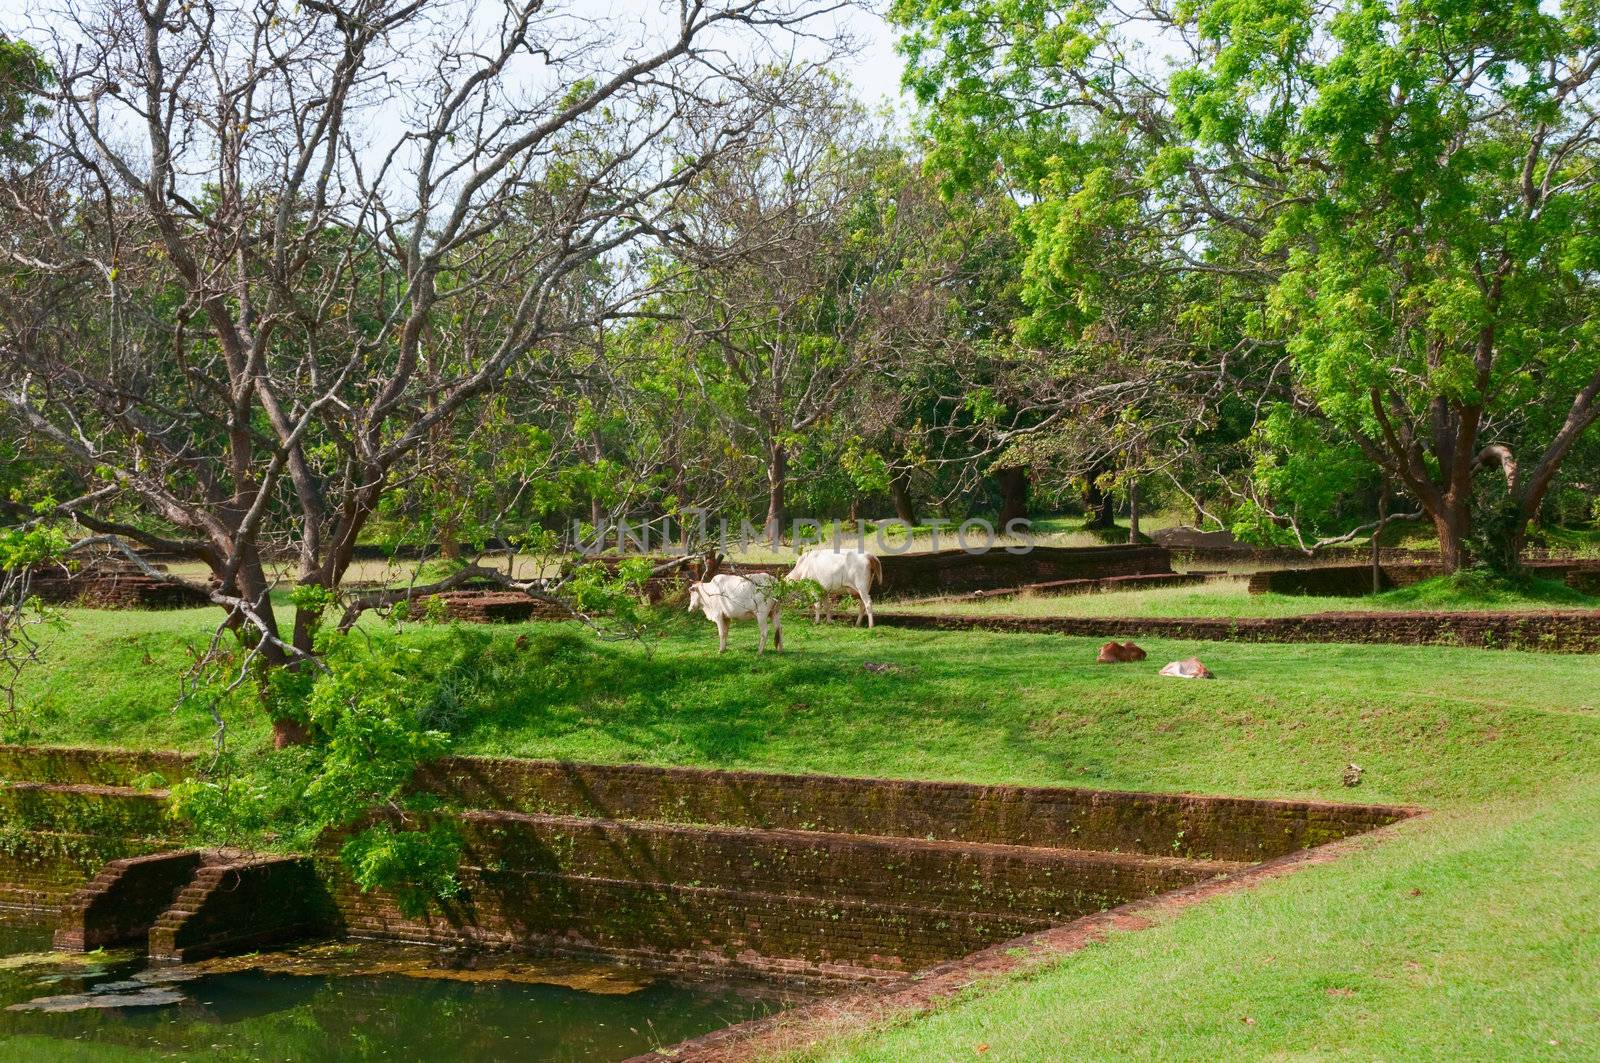 Cows on Sigiriya castle ruins, ancient brickwork and pool, Sri Lanka